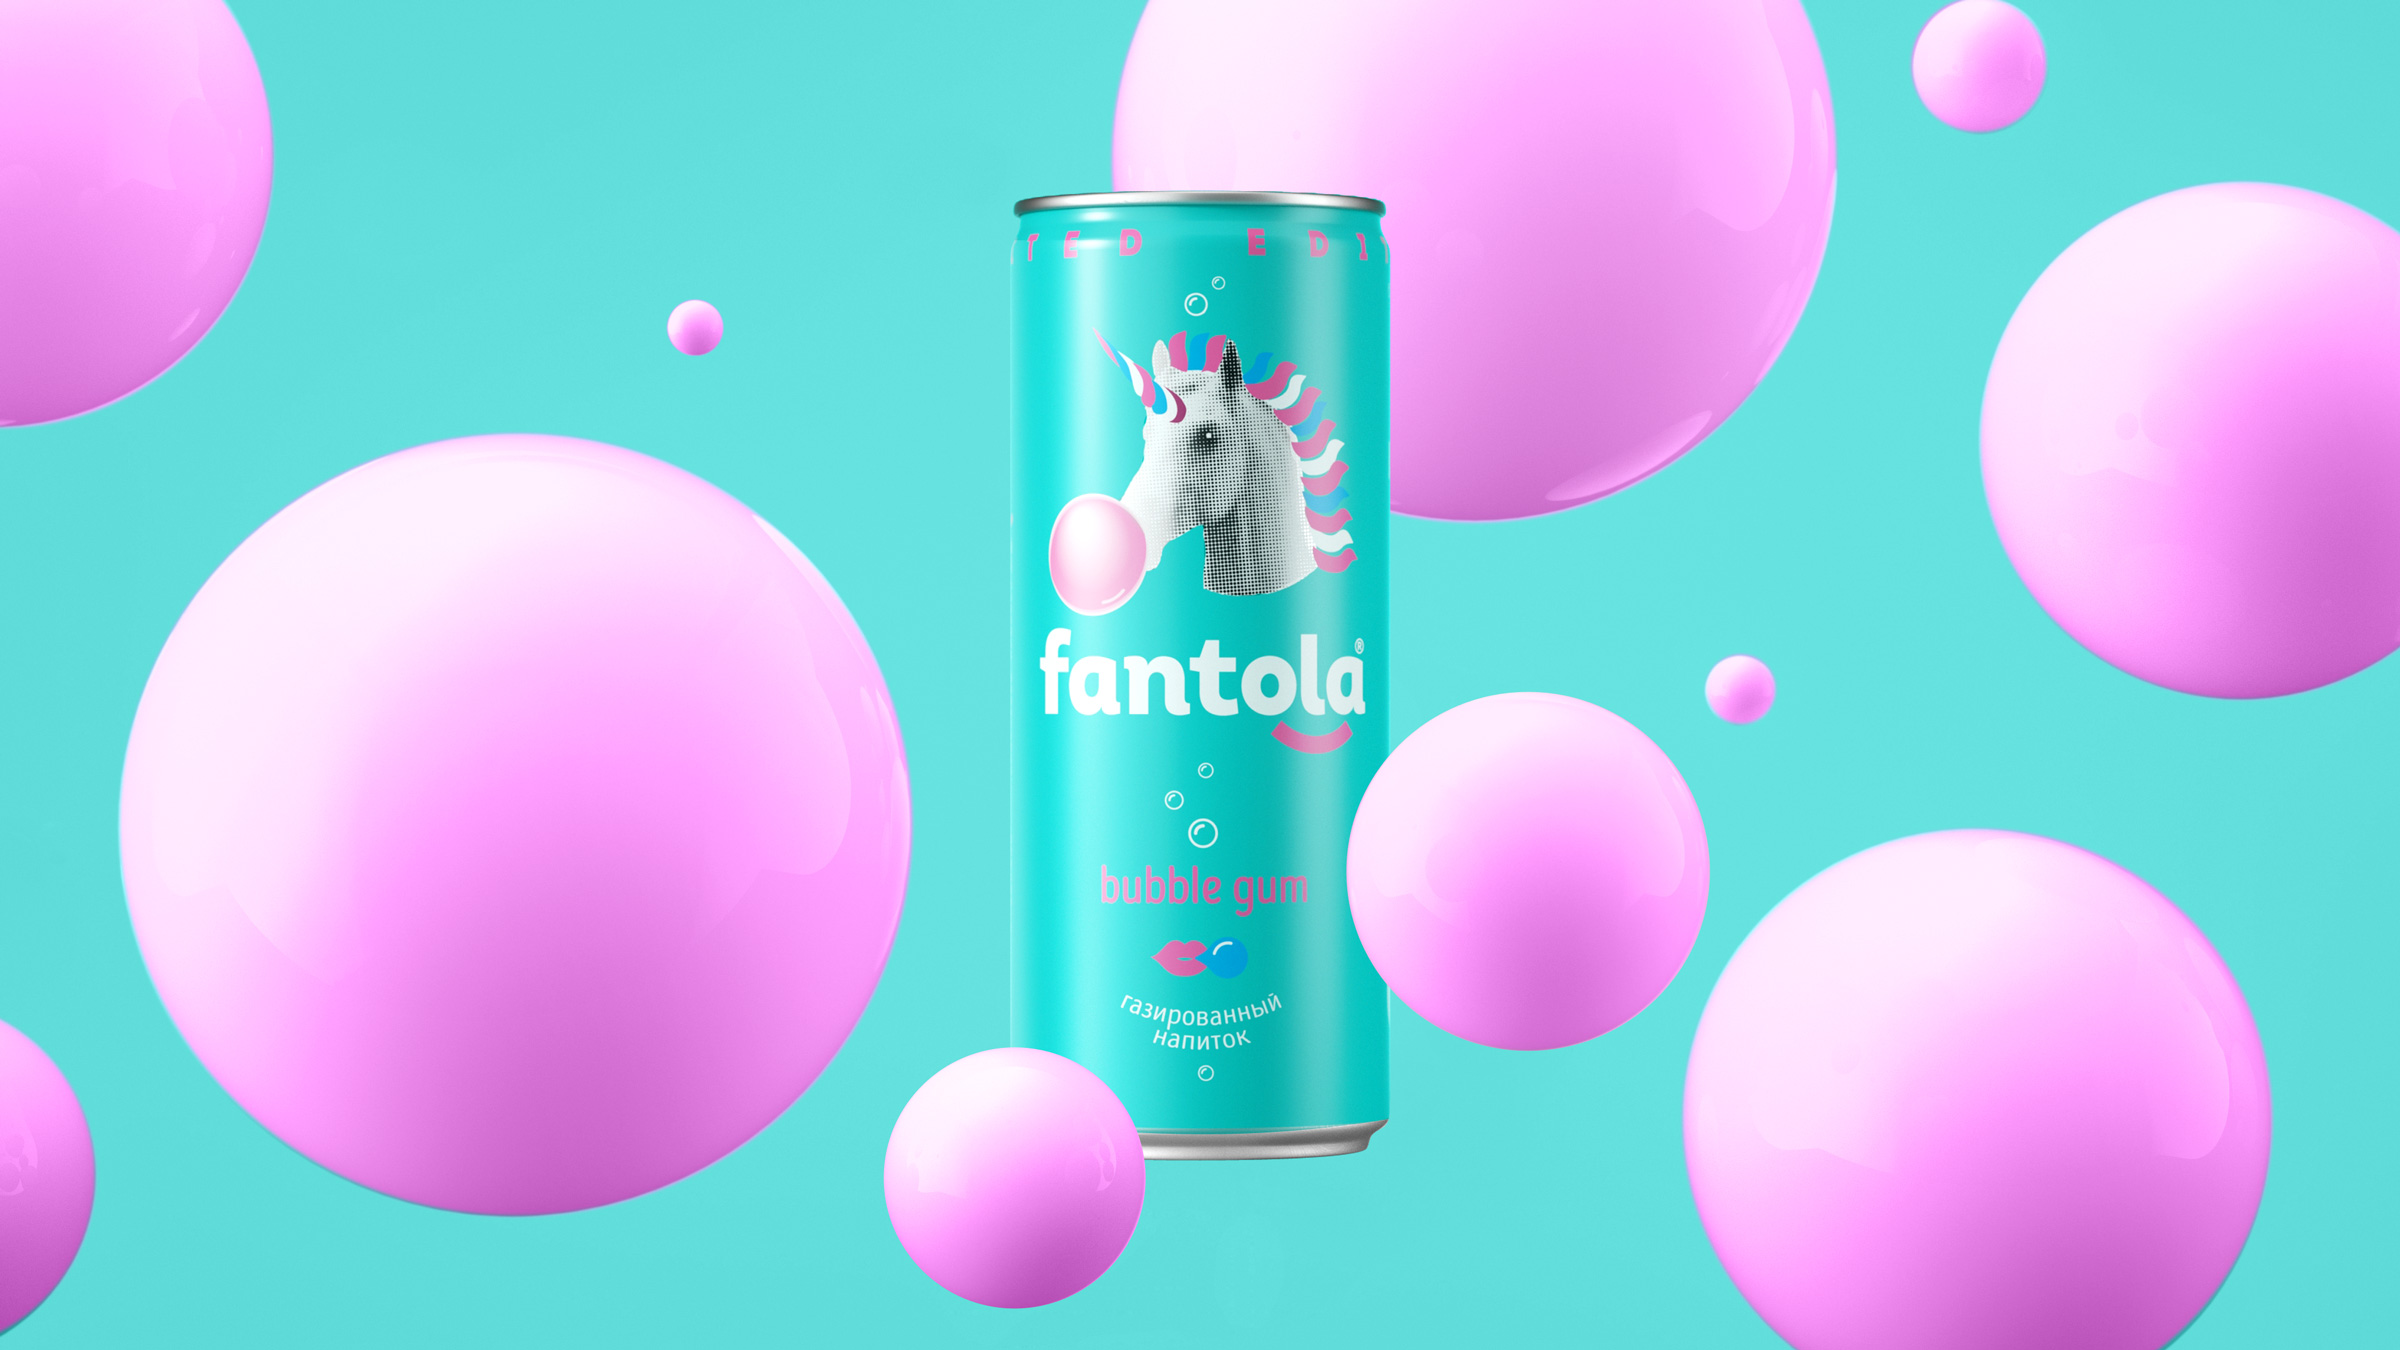 New Soft Drink Fantola Is For Generation Z Dieline Design, Branding